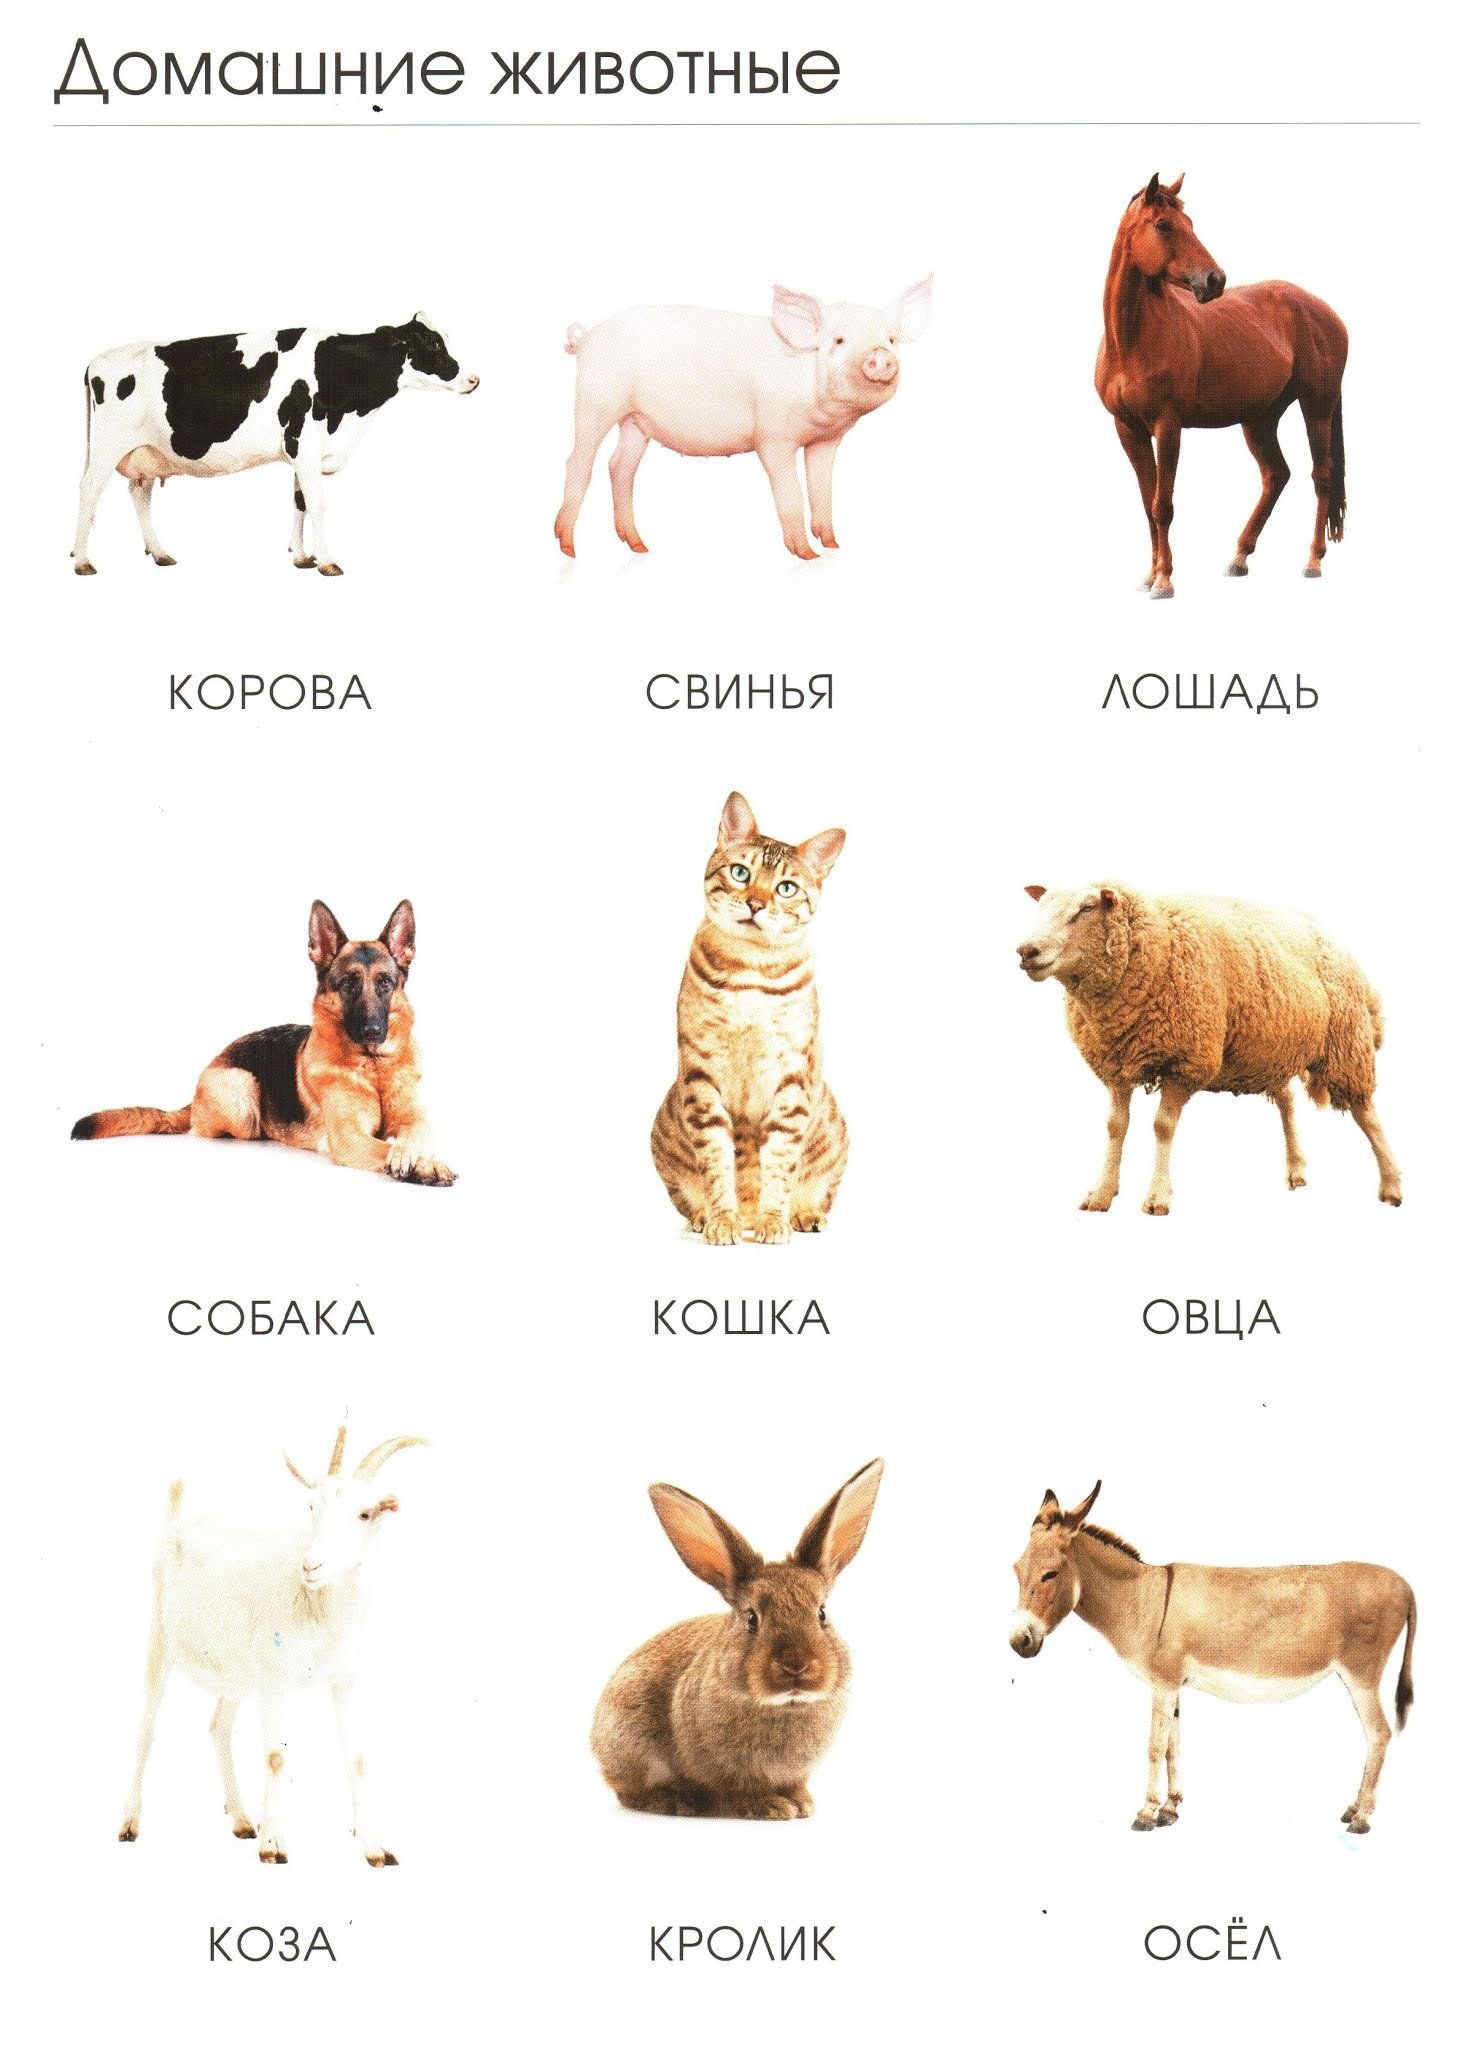 Домашние животные. Домашние животные картинки. Кошка собака корова коза. Примеры домашних животных. Корова свинья собака кошка